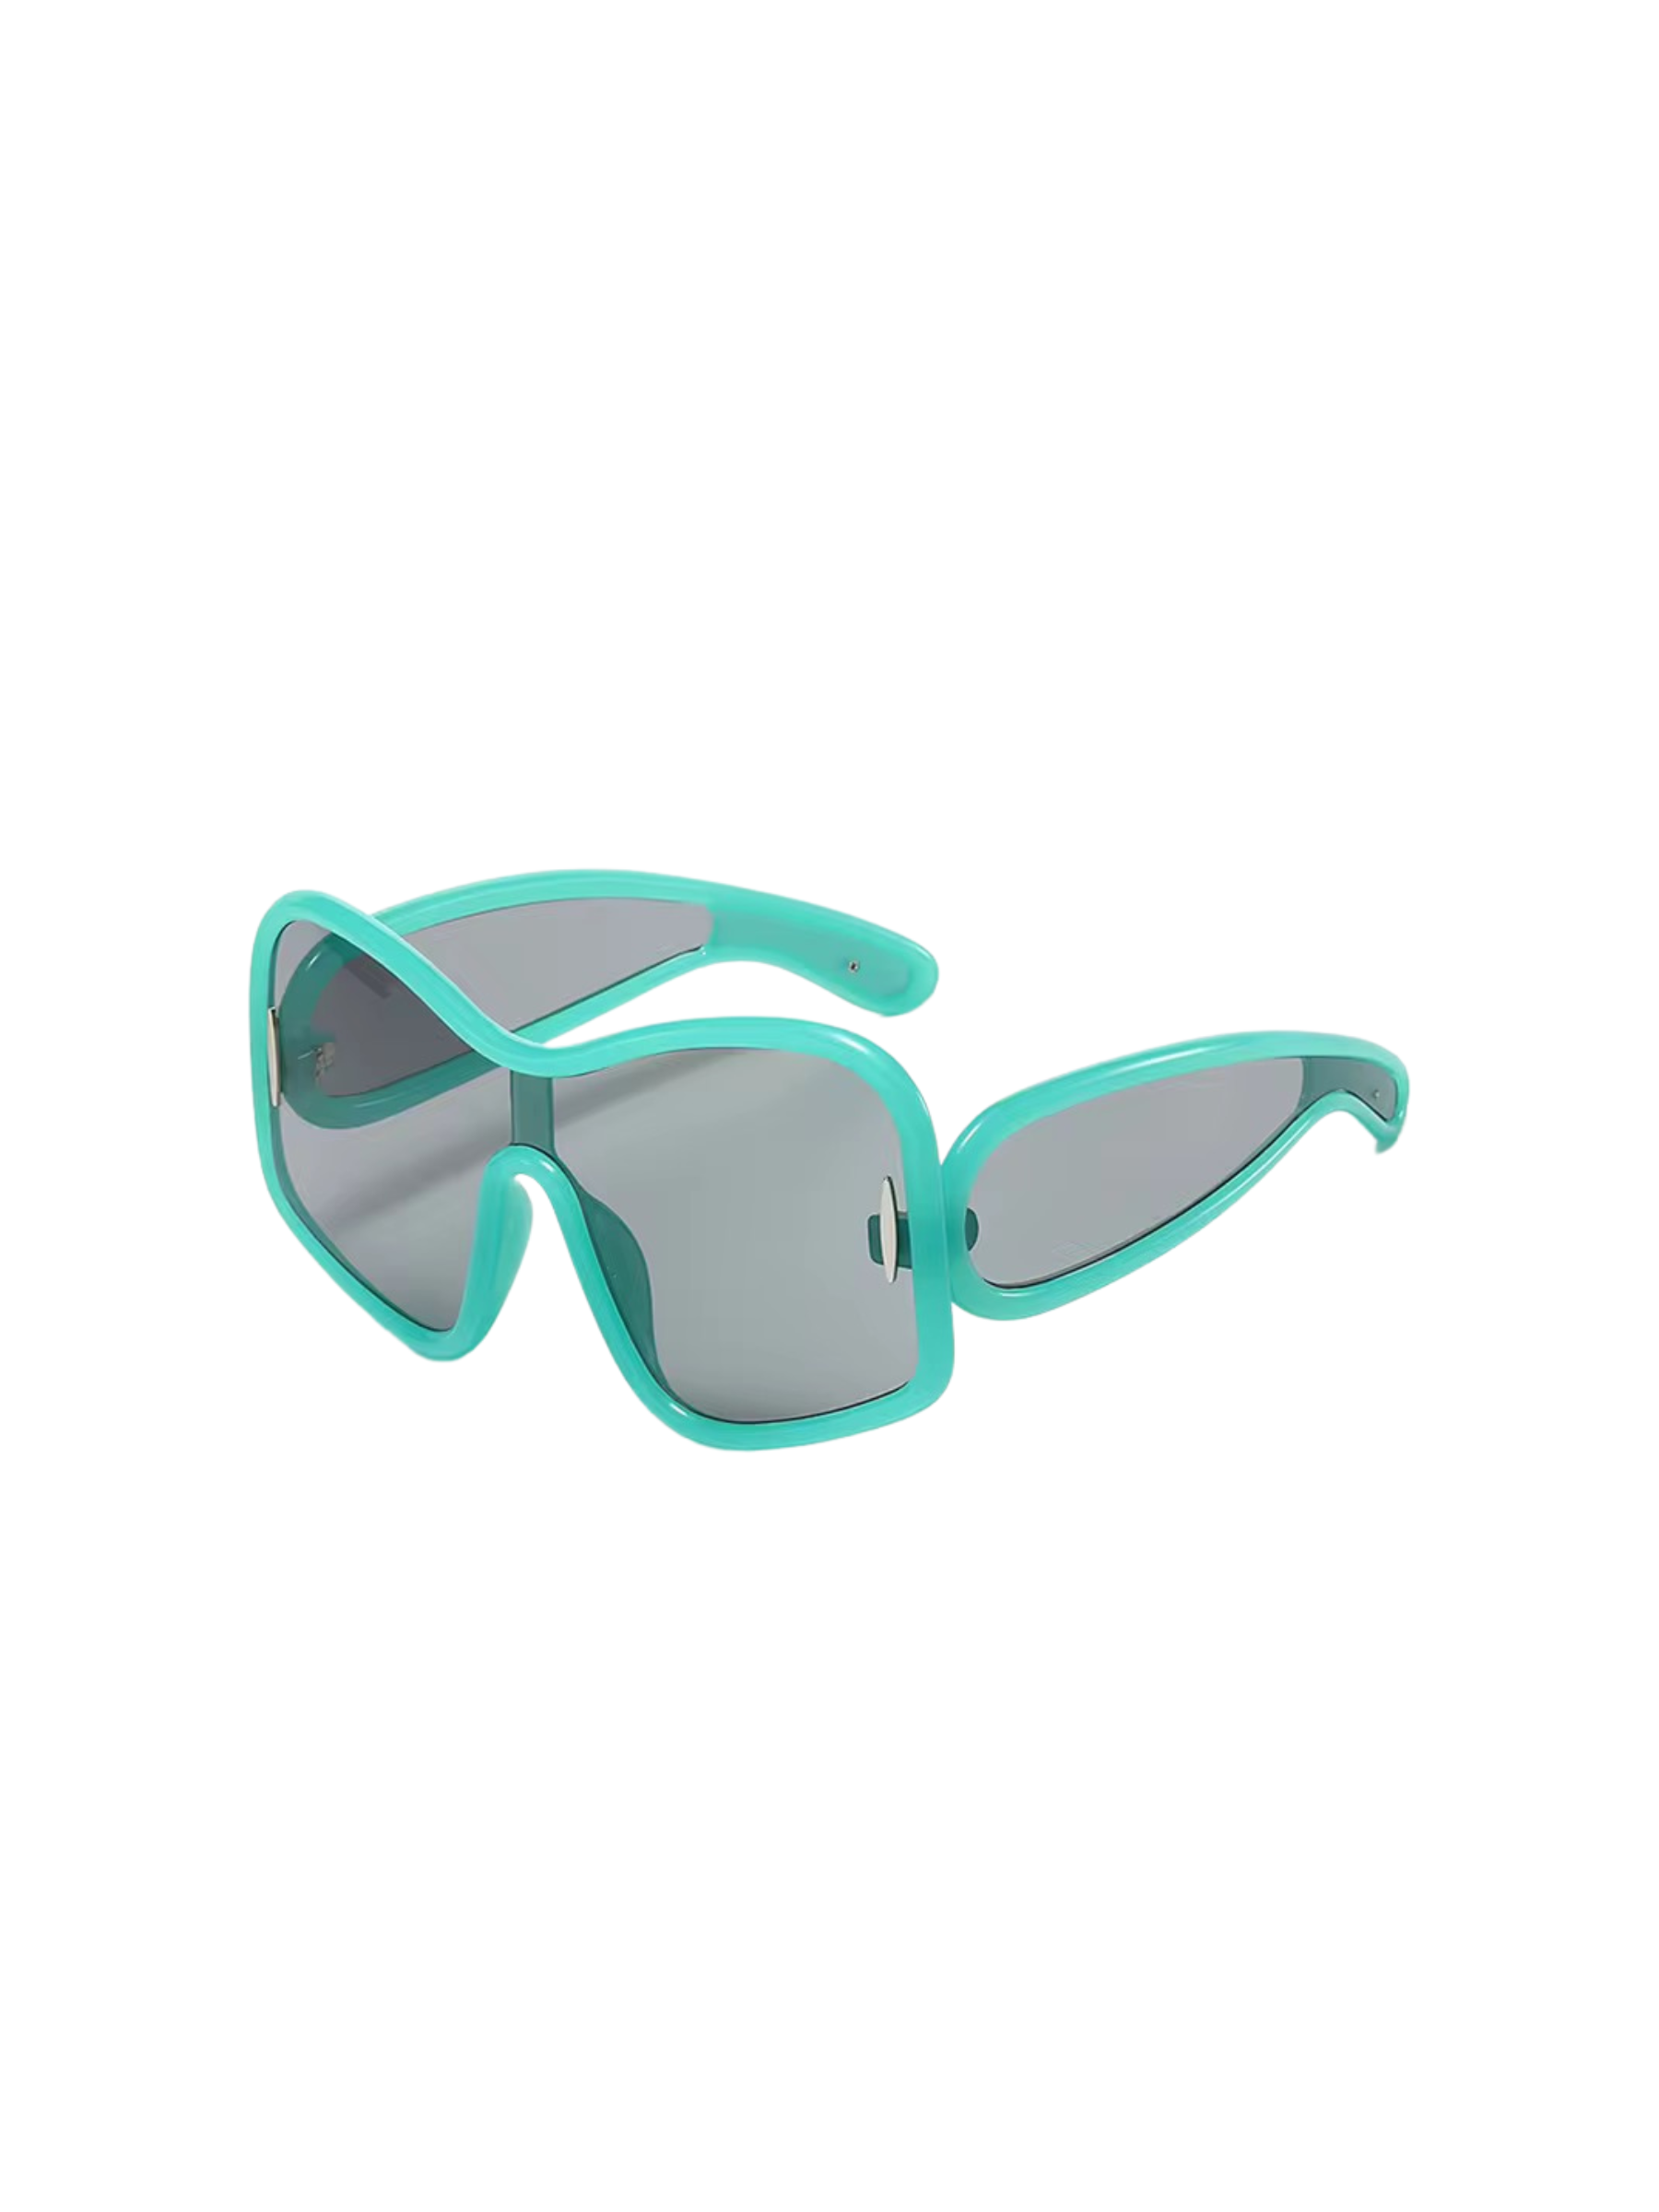 GOLDxTEAL oversized aqua blue sunglasses.